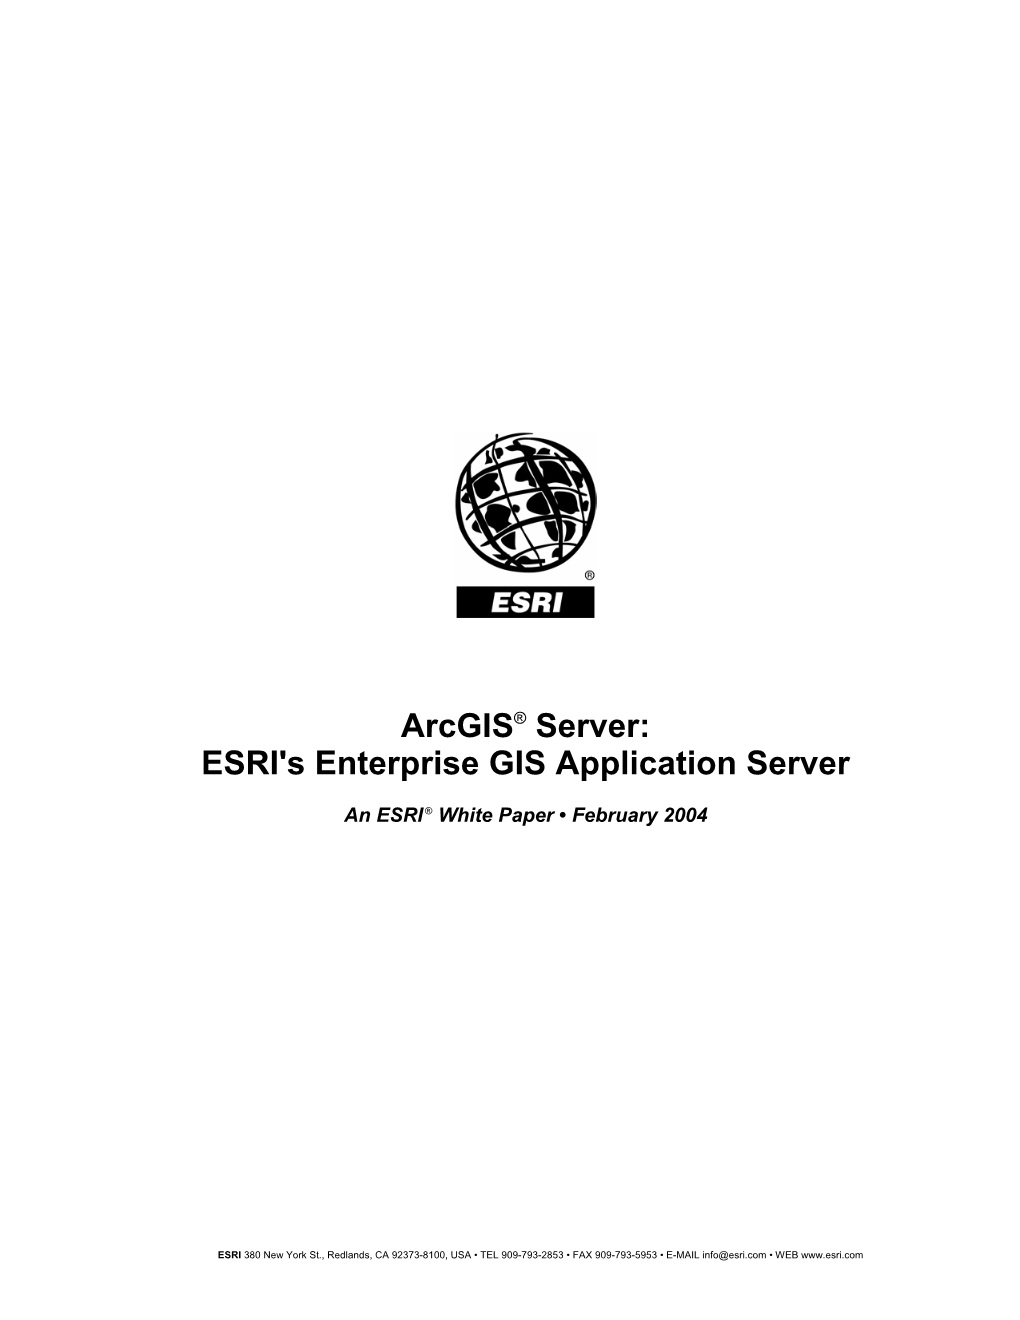 Arcgis Server: ESRI's Enterprise GIS Application Server